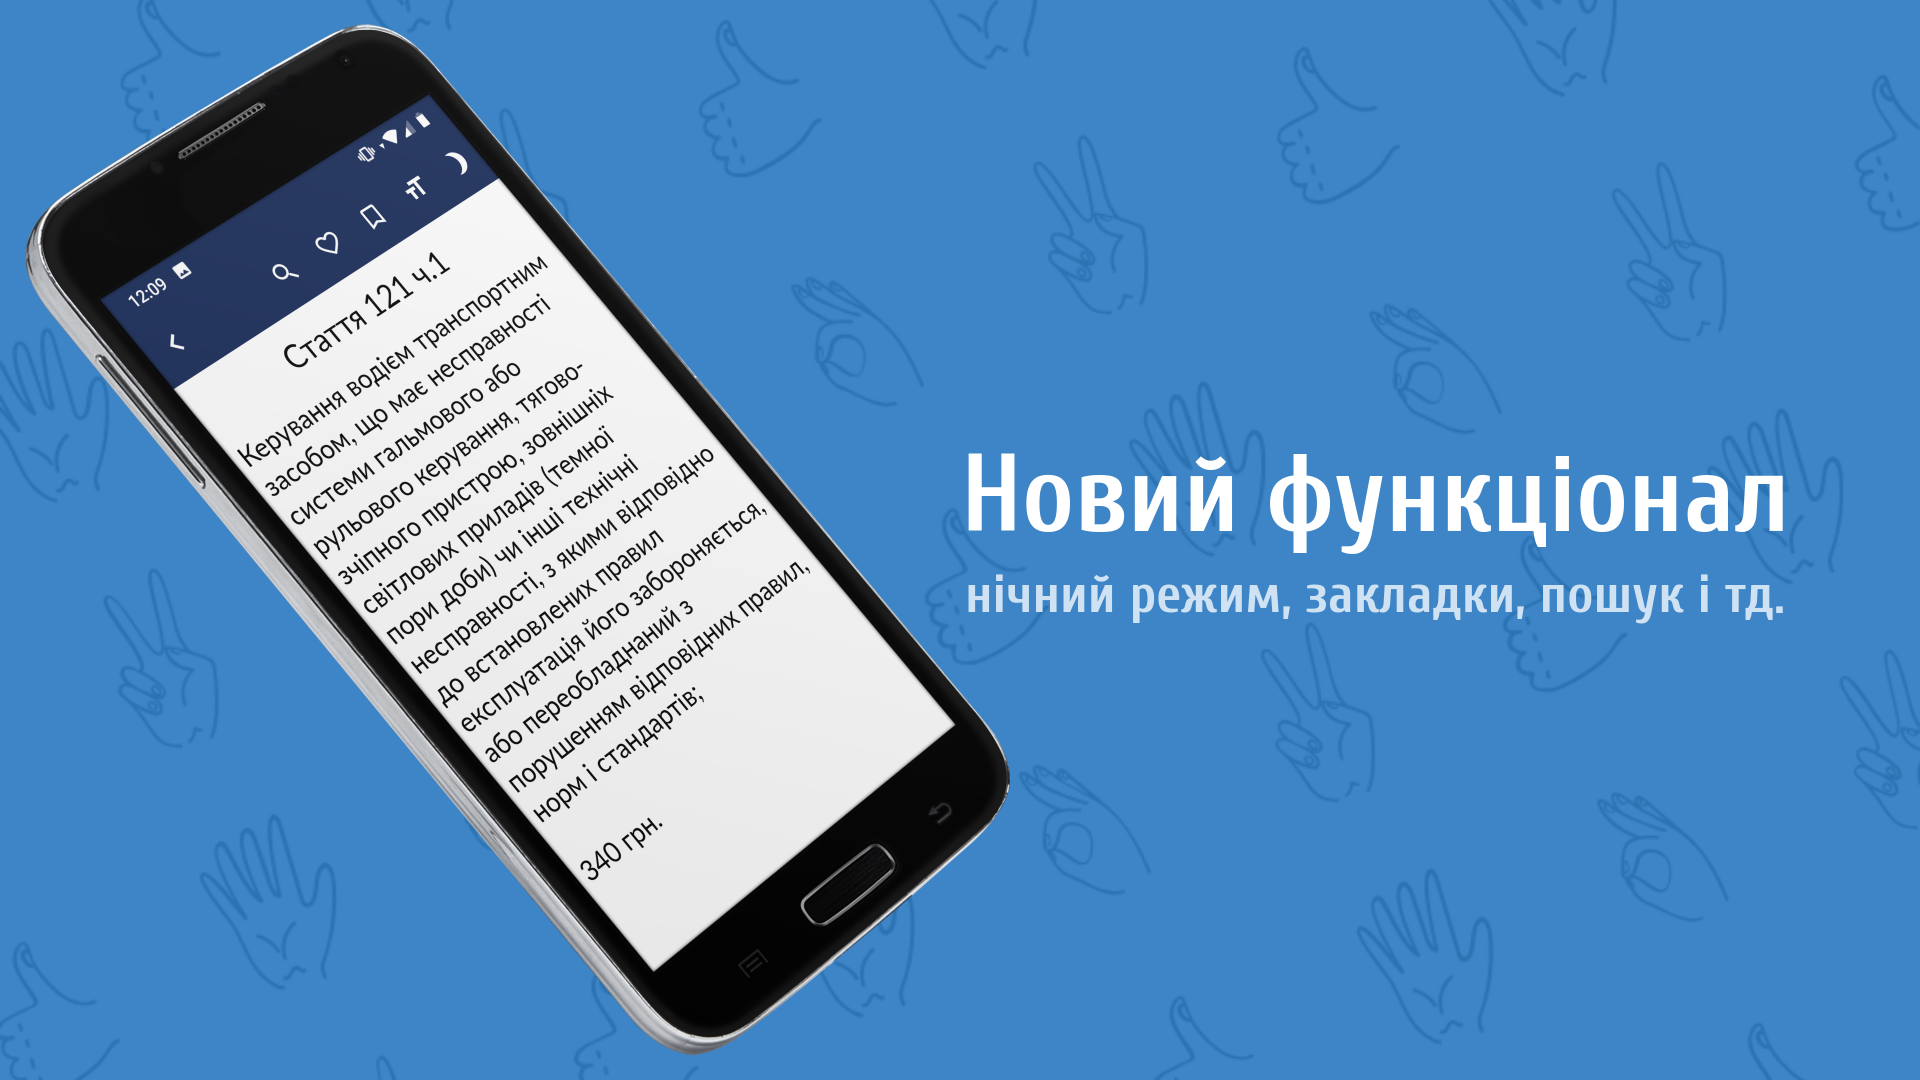 Android application Патруль screenshort